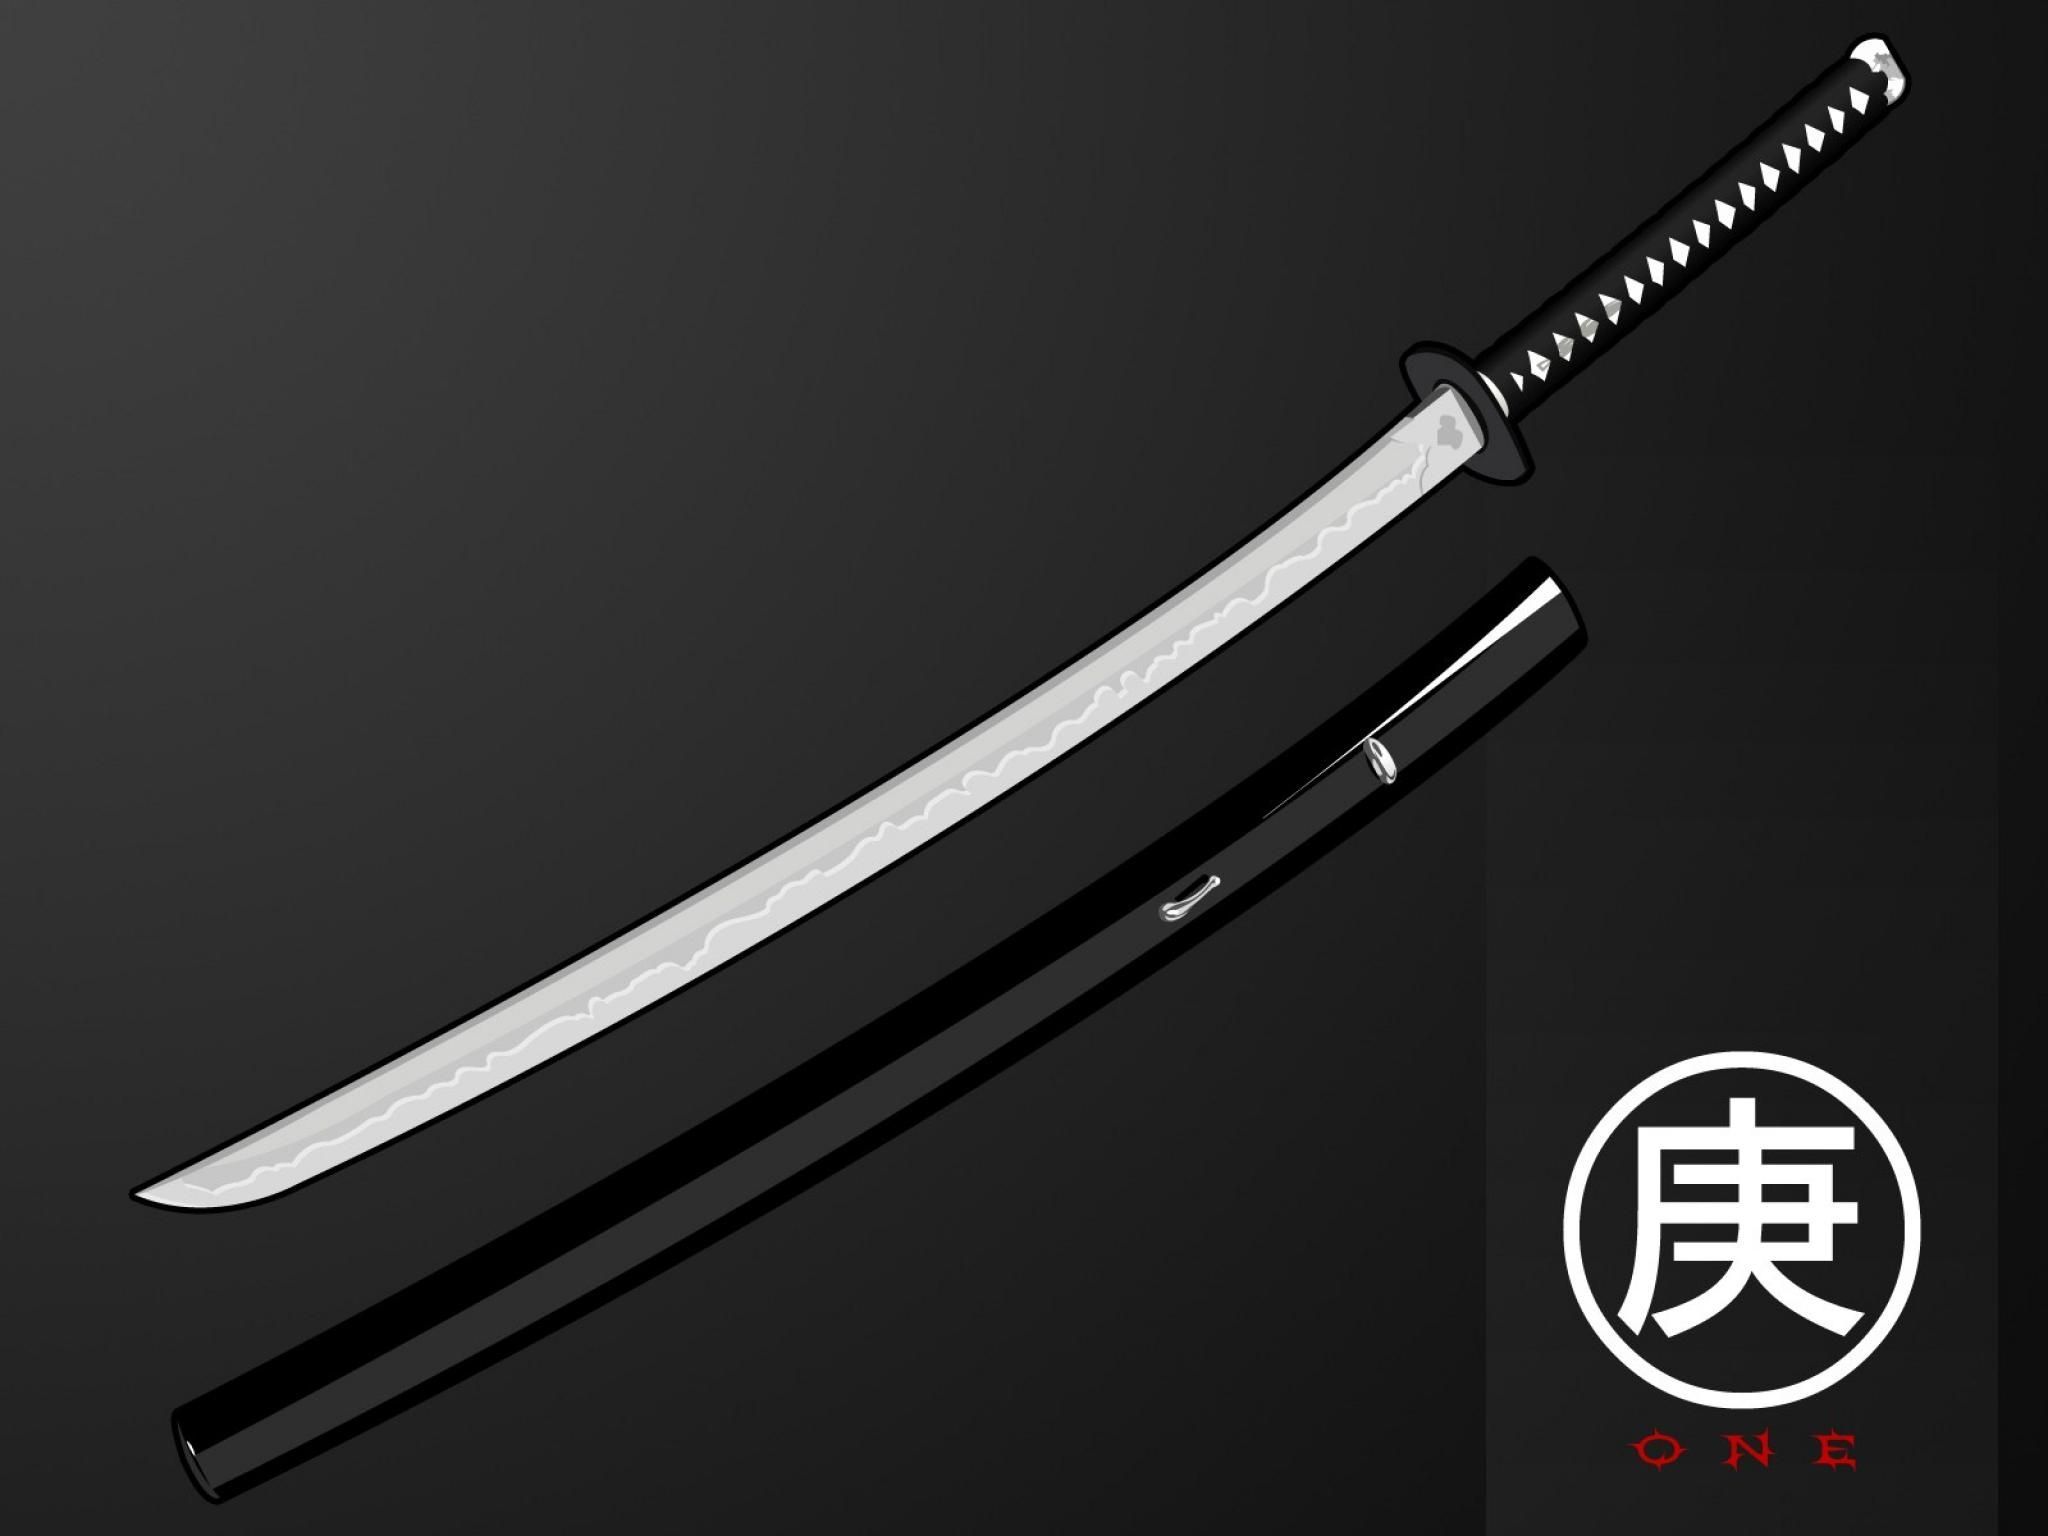 Download Image HD Wallpaper. Best Quality HD Wallpaper. Ninja sword, Samurai swords, Katana